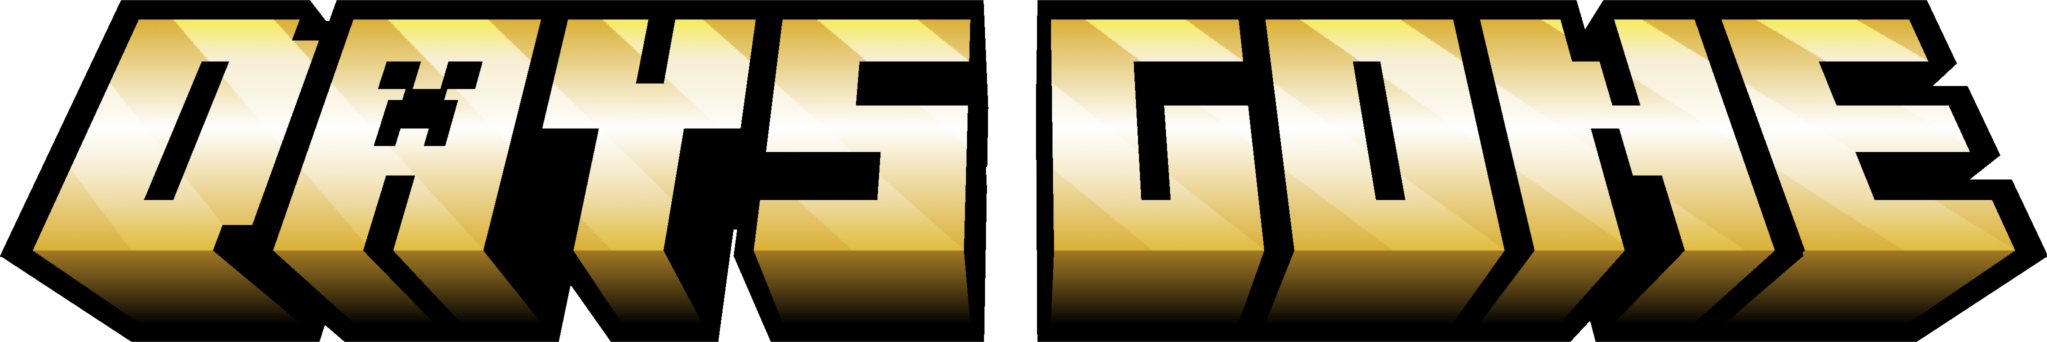 Mod logo